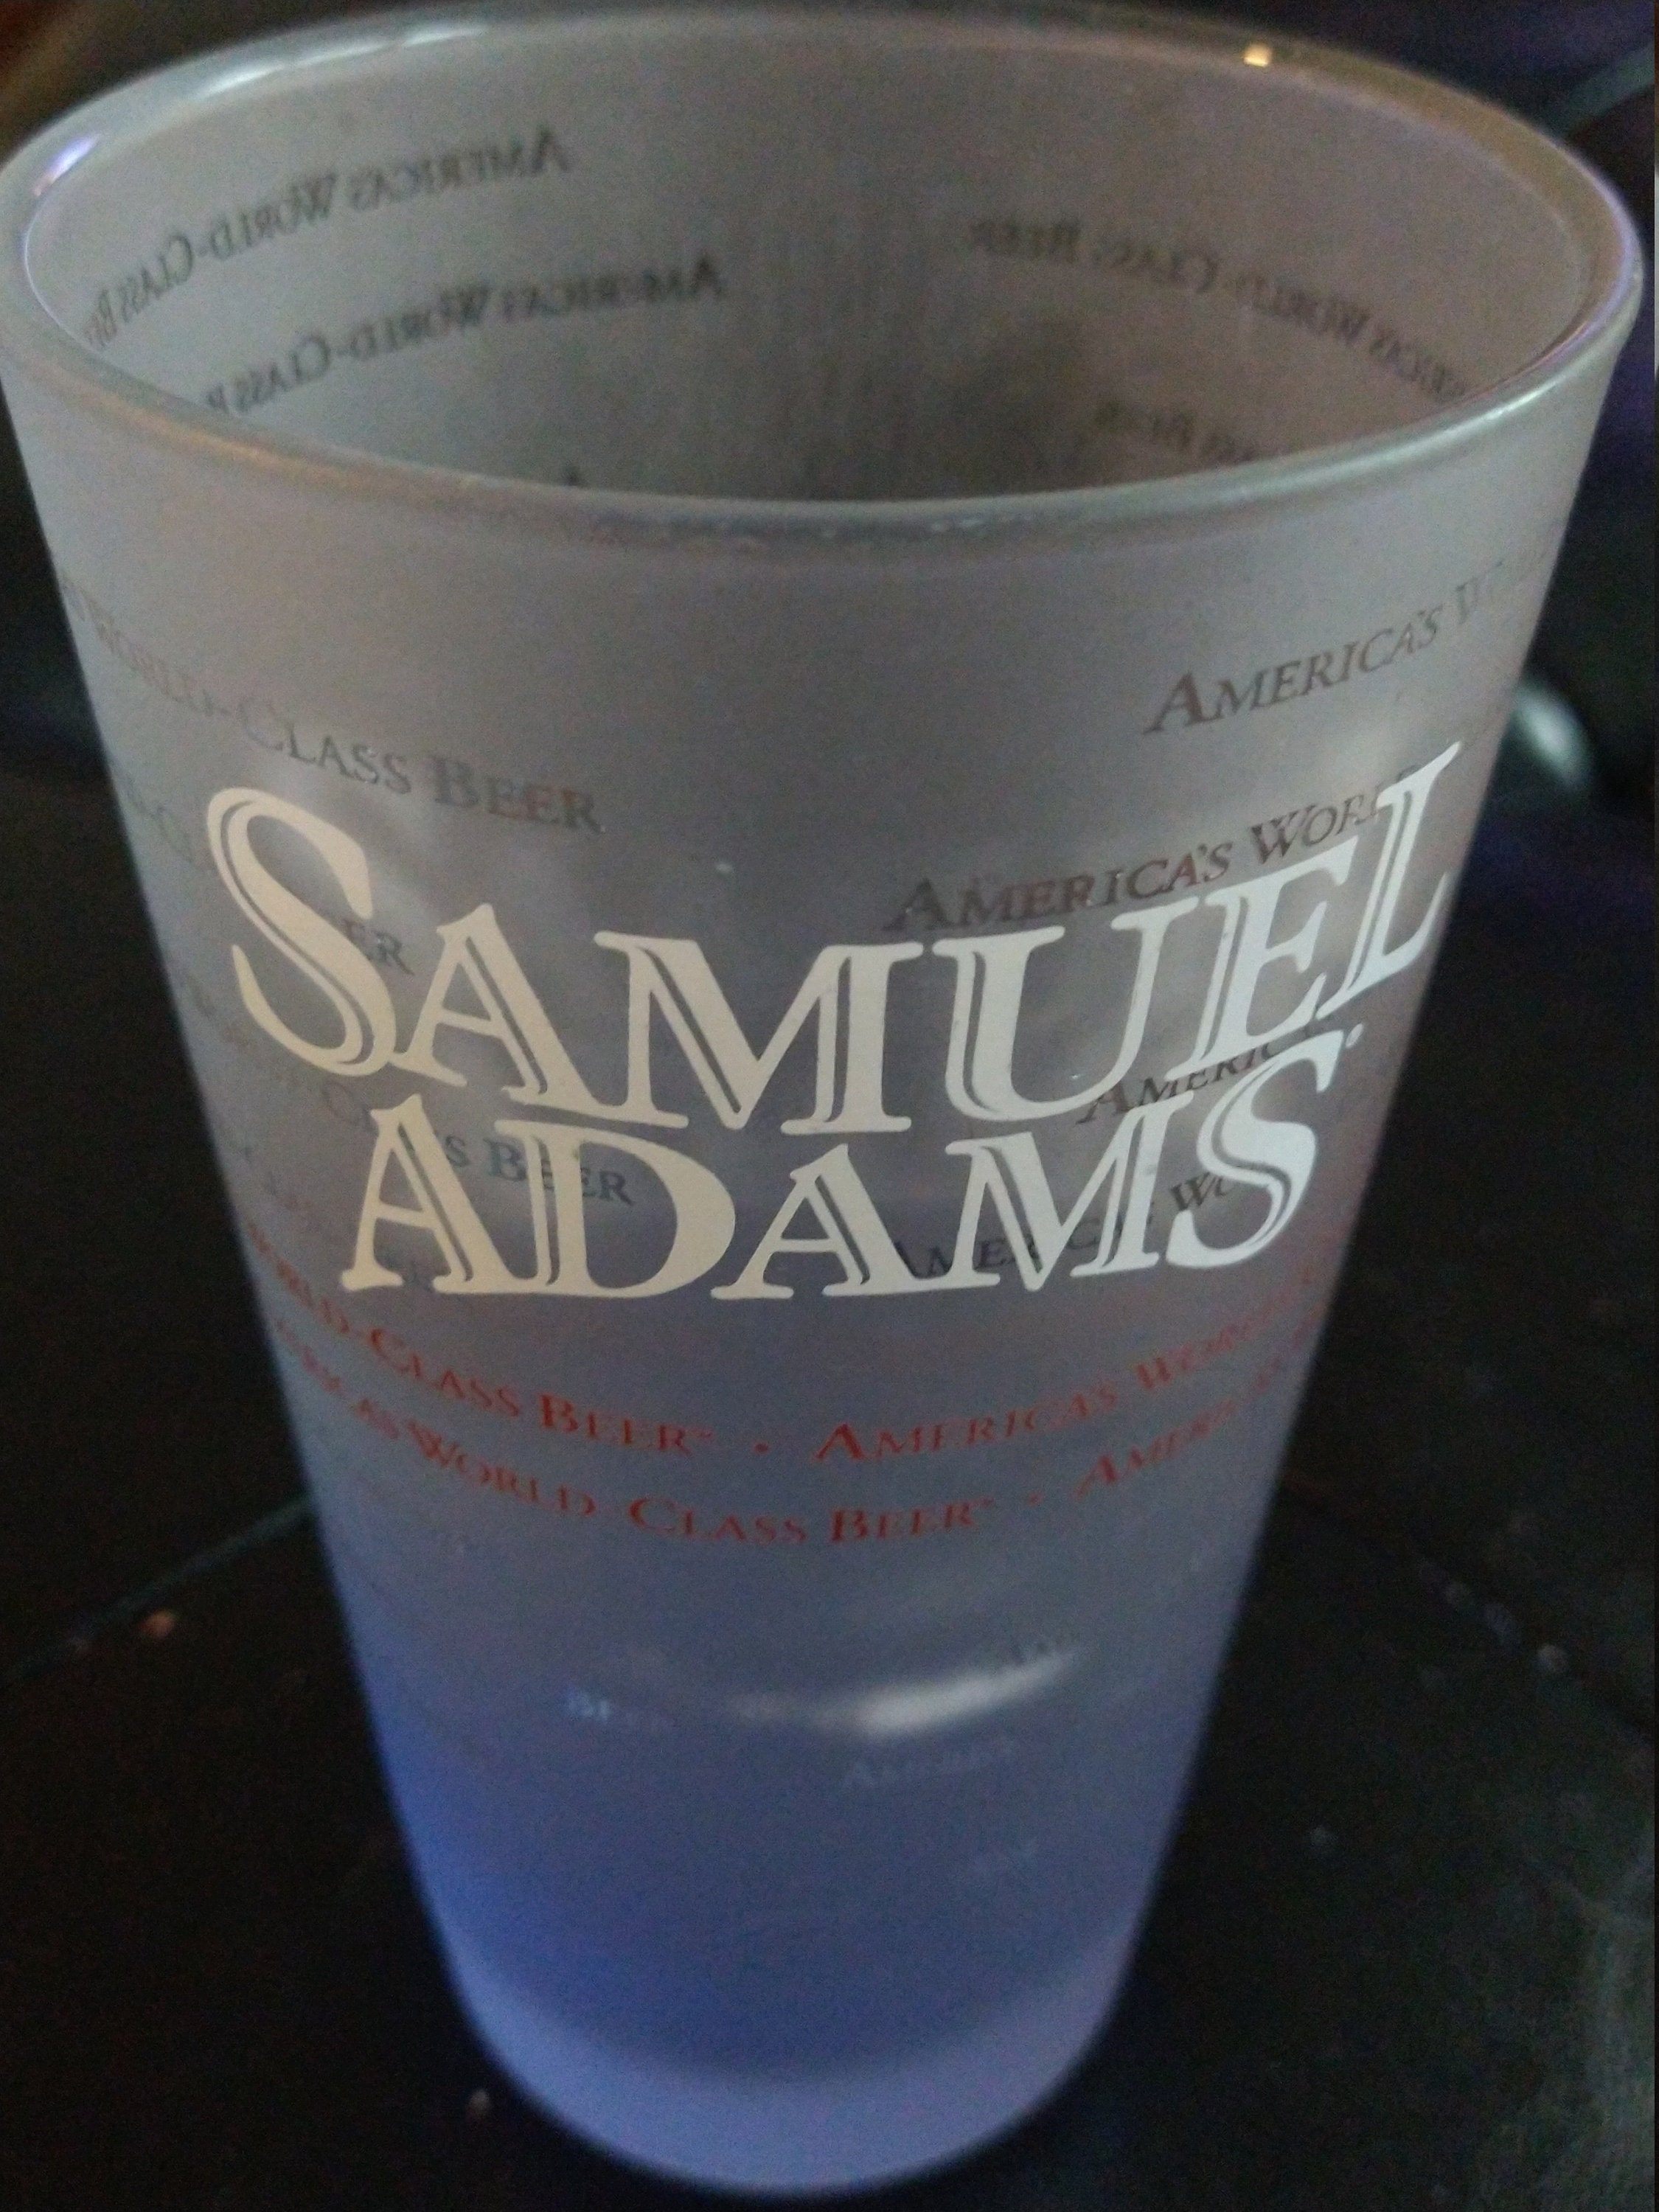 Samuel Adams Celebrate an American Original Sensory Nucleated Beer Glasses  2 pcs